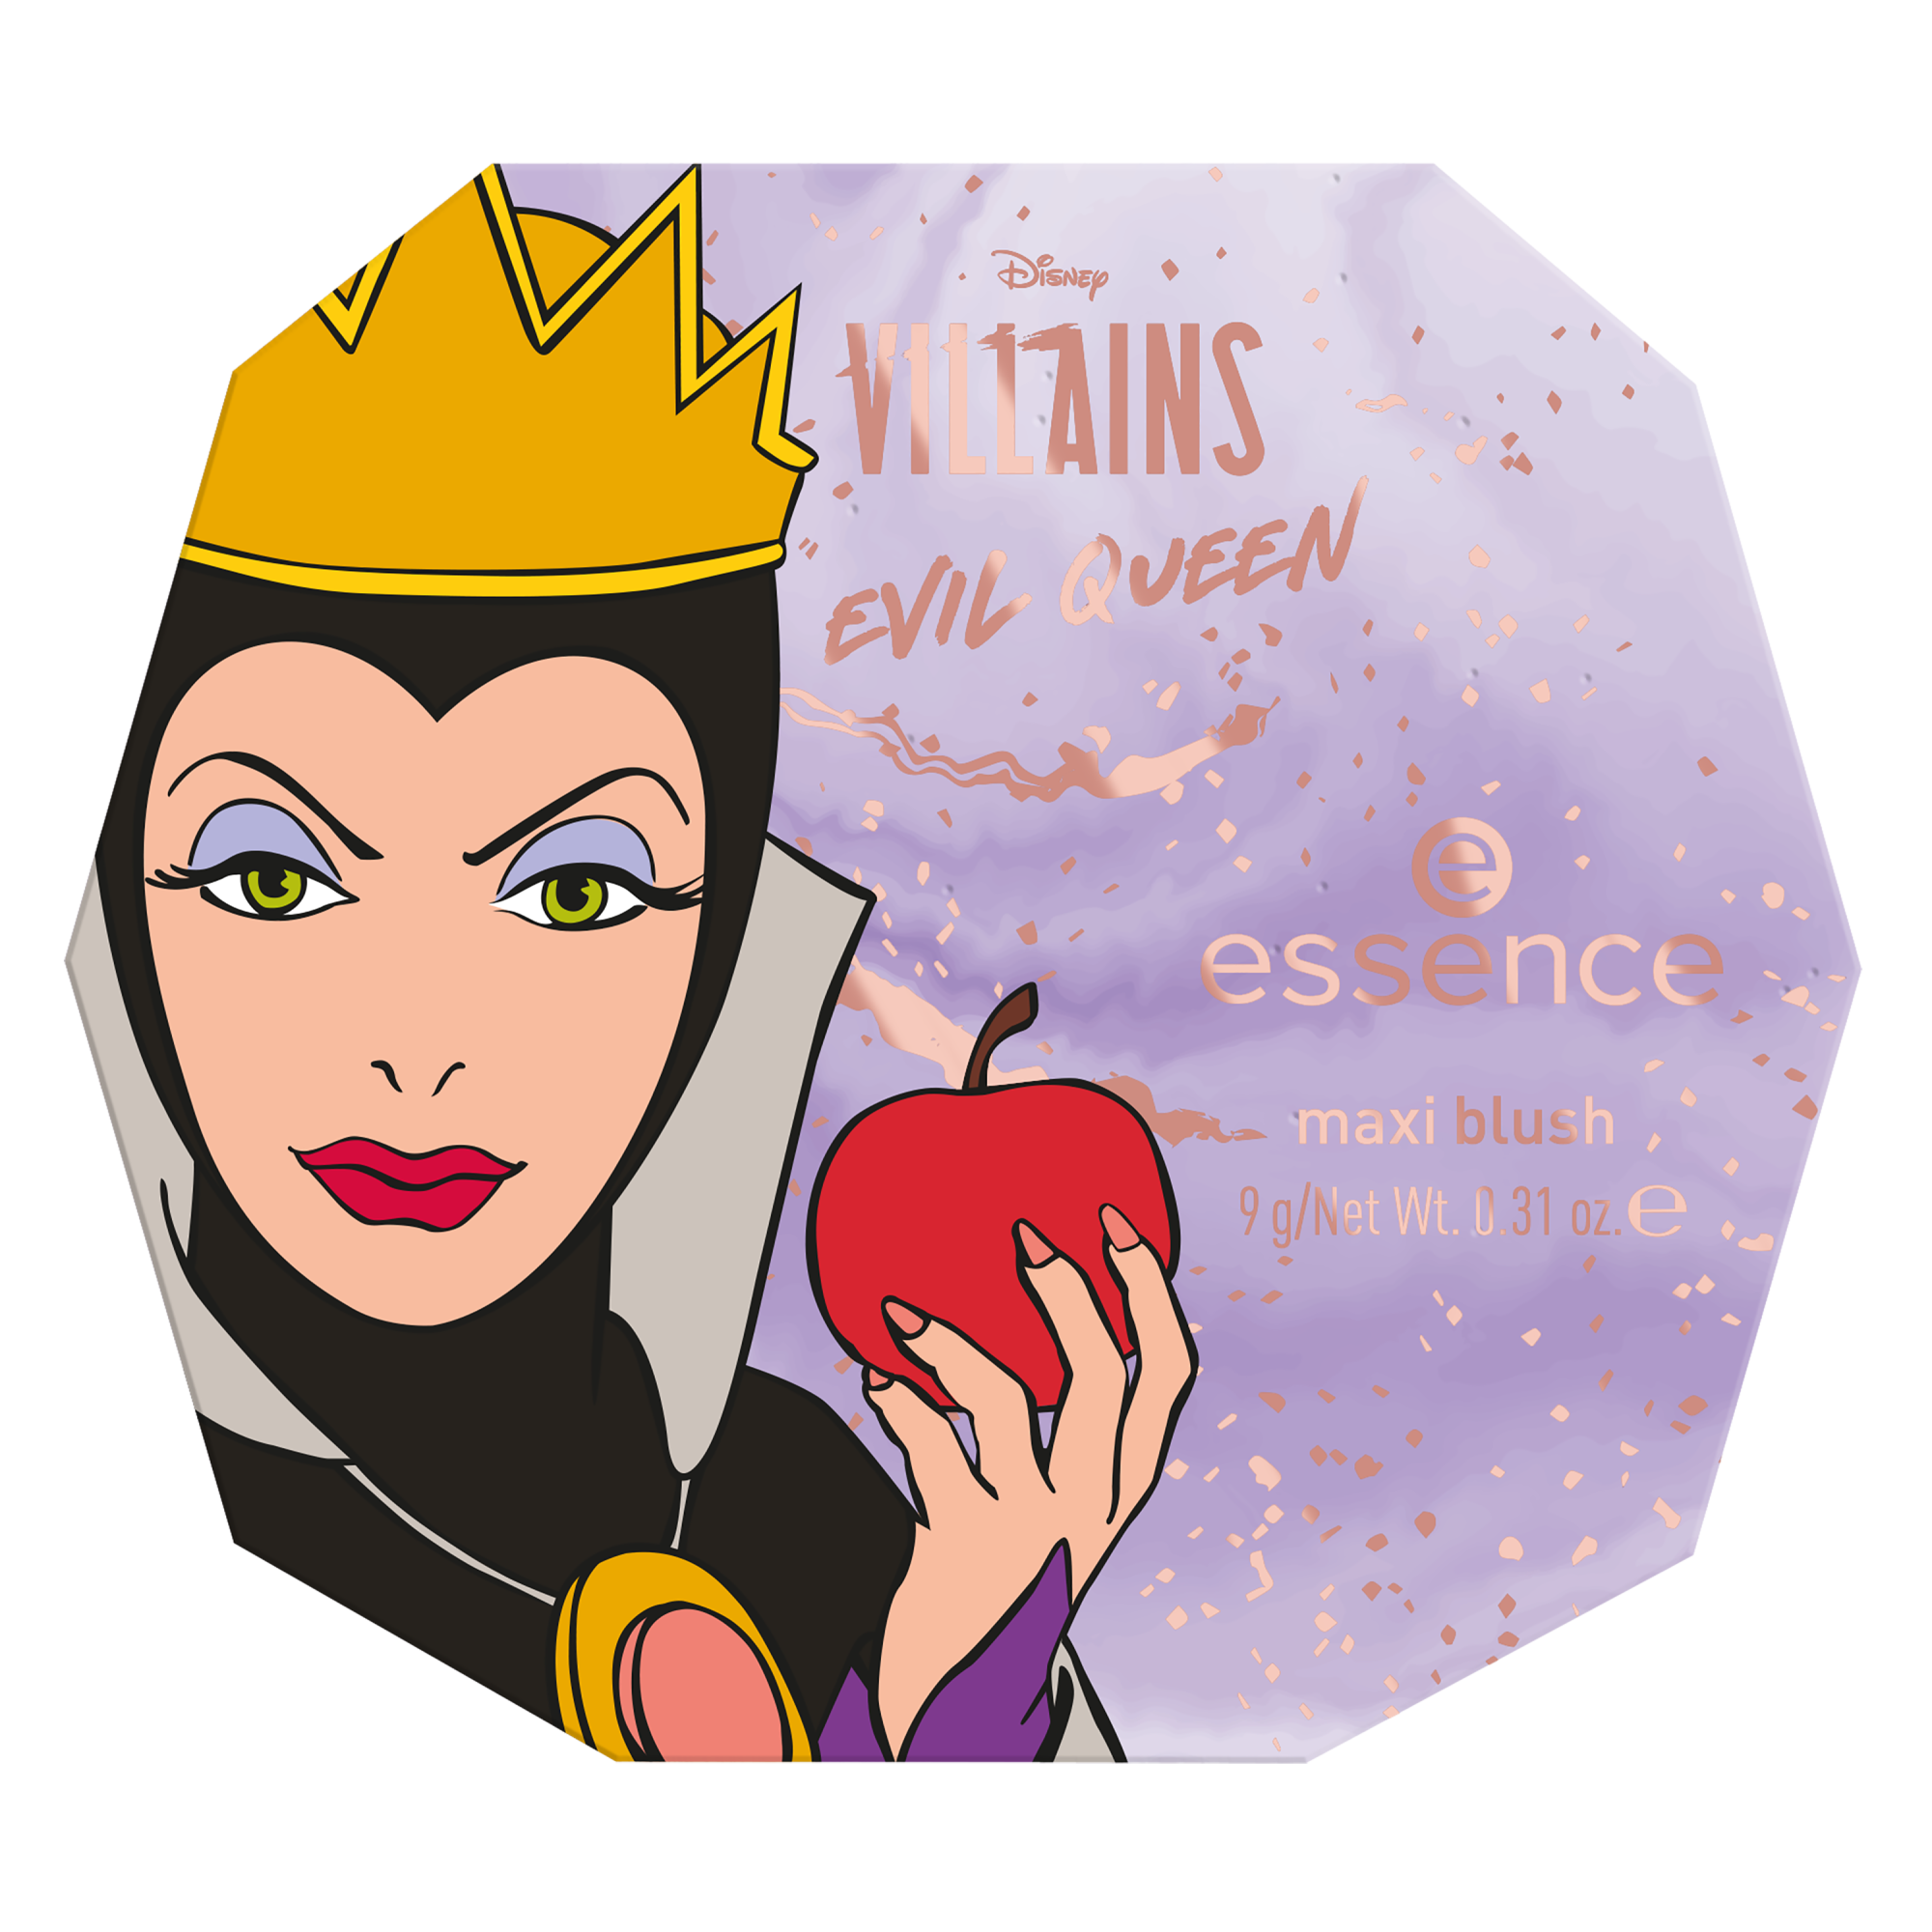 Disney Villains Evil Queen maxi blush